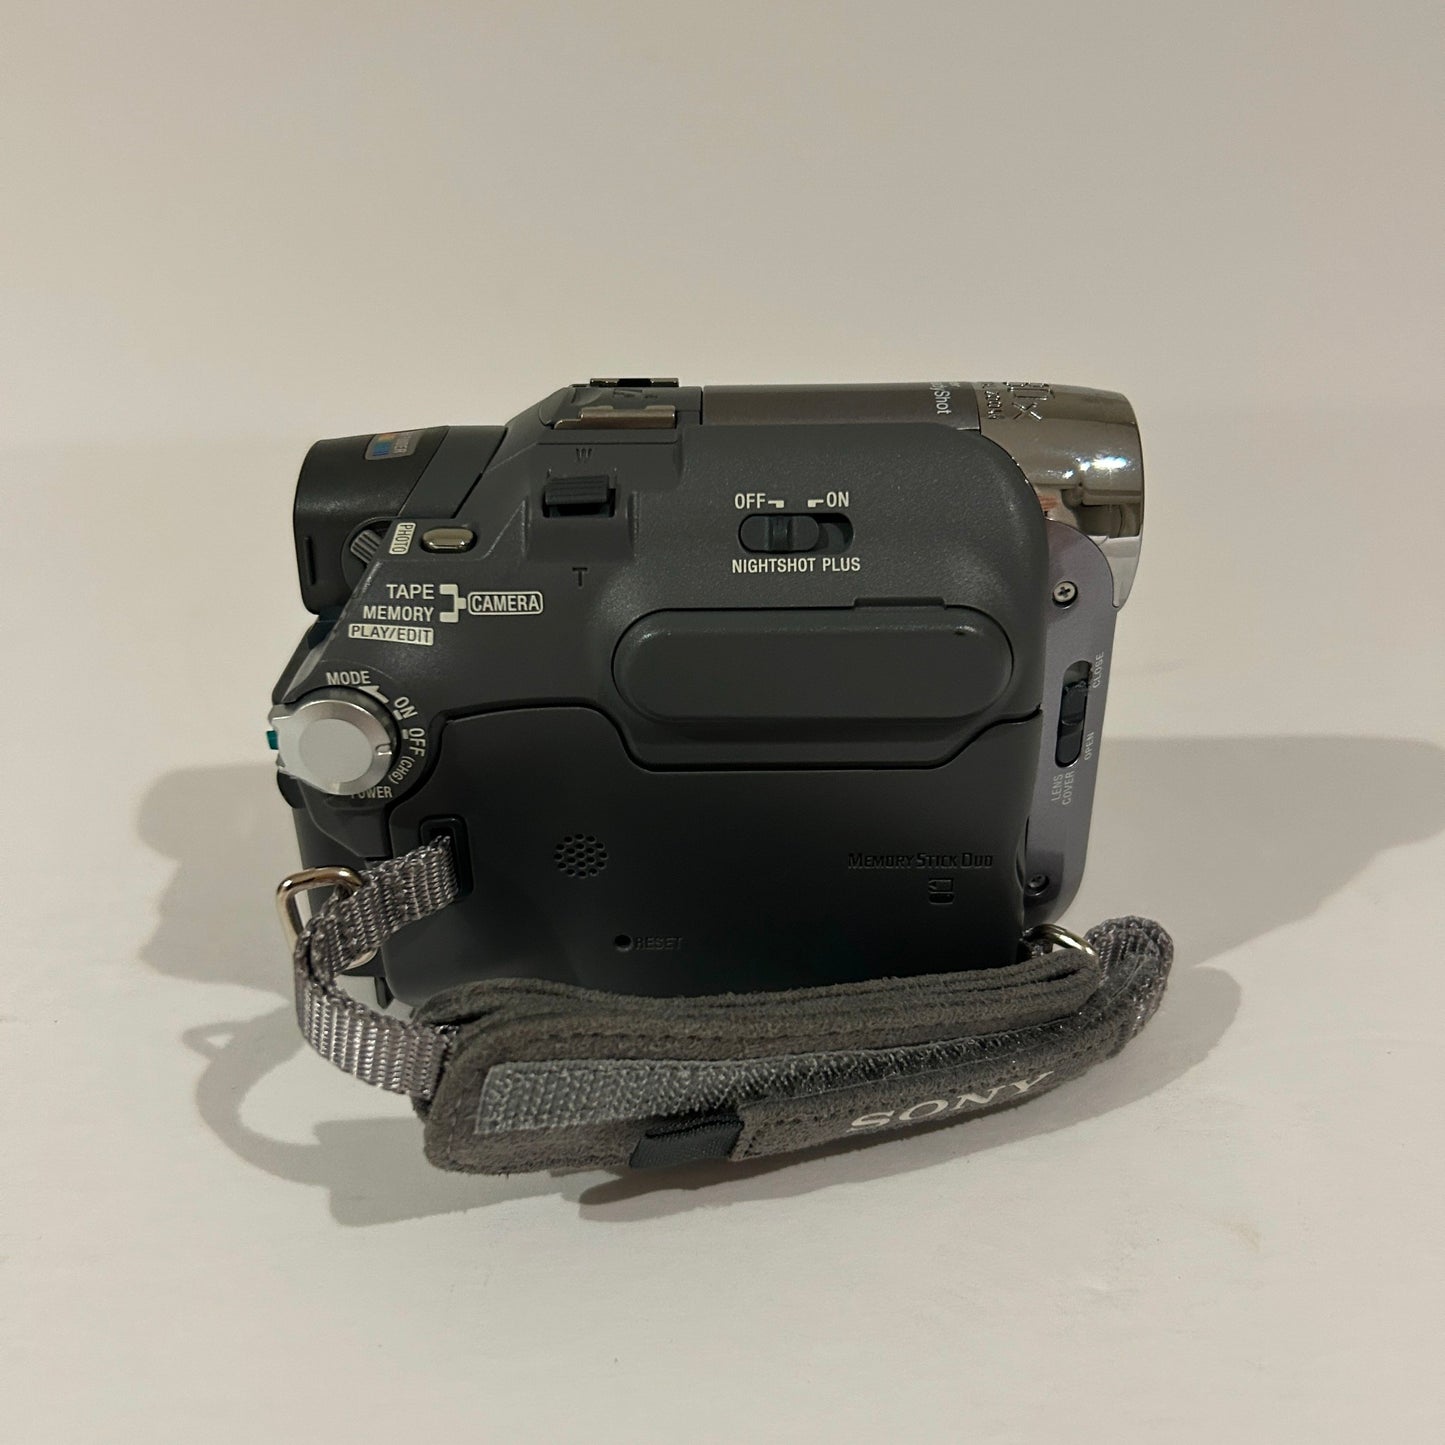 Sony Handycam NTSC MiniDV Camcorder - DCR-HC42